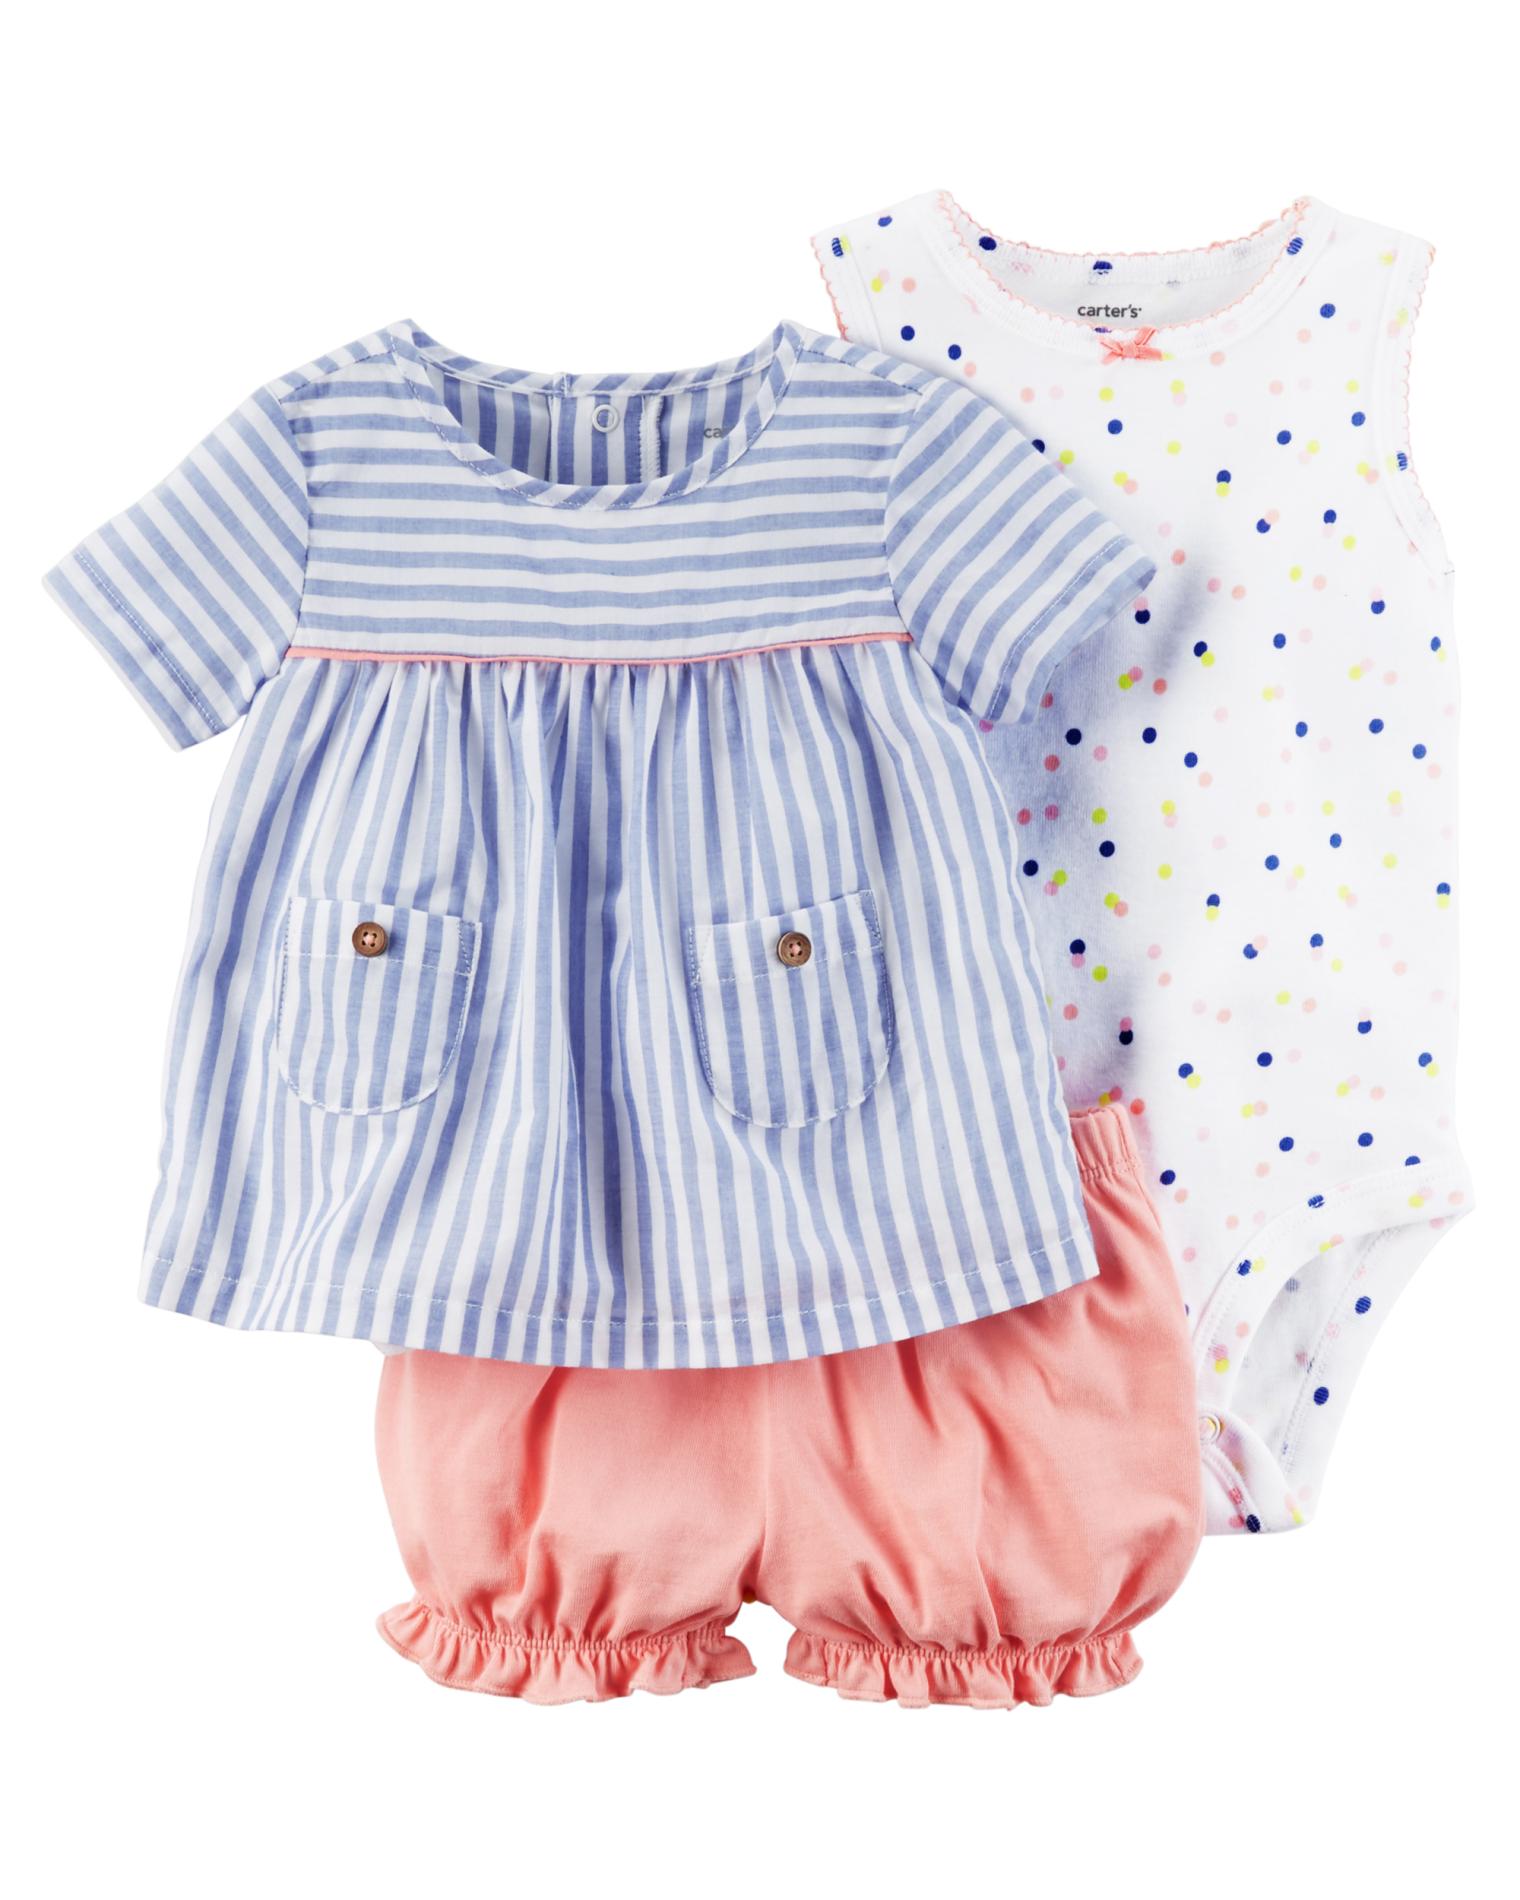 Carter's Newborn & Infant Girls' Bodysuit, Top & Shorts - Polka Dot & Striped